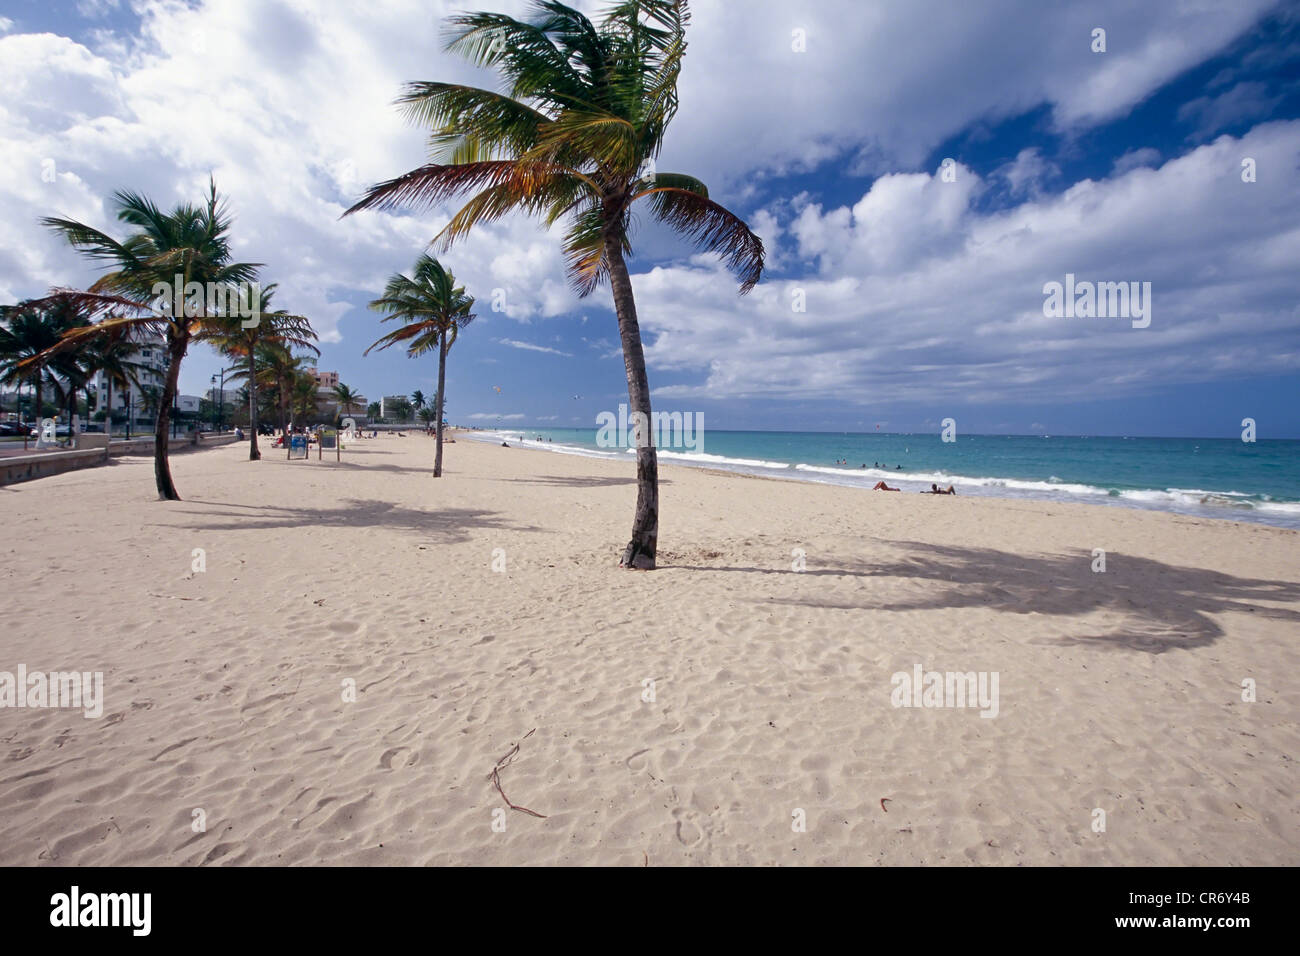 Palmen auf einem Strand, Playa de Ocean Park, San Juan, Puerto Rico Stockfoto